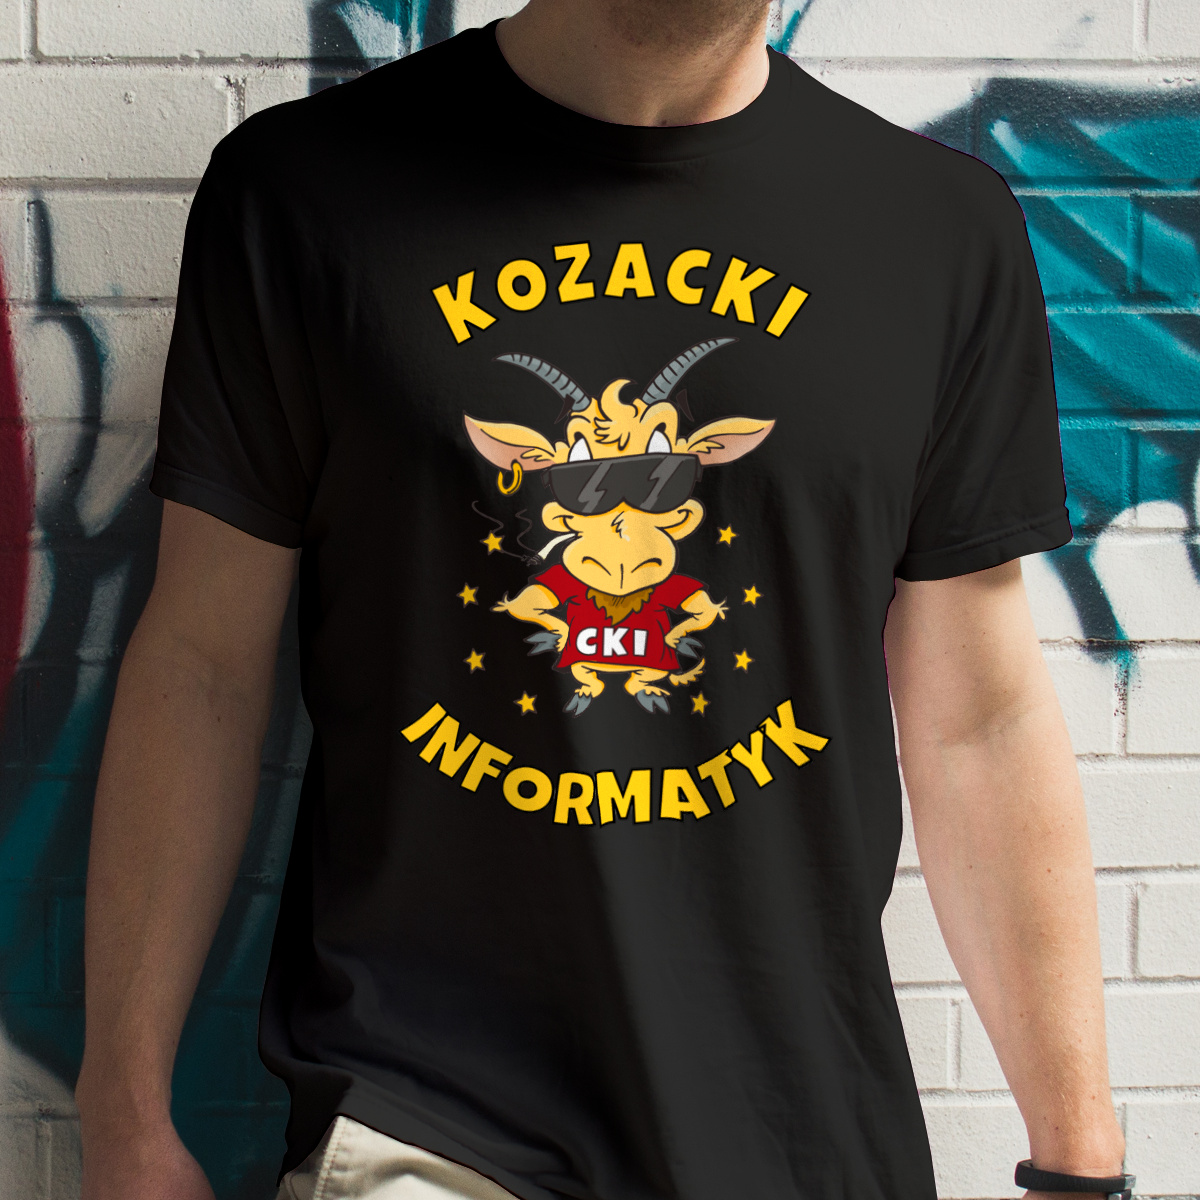 Kozacki Informatyk - Męska Koszulka Czarna